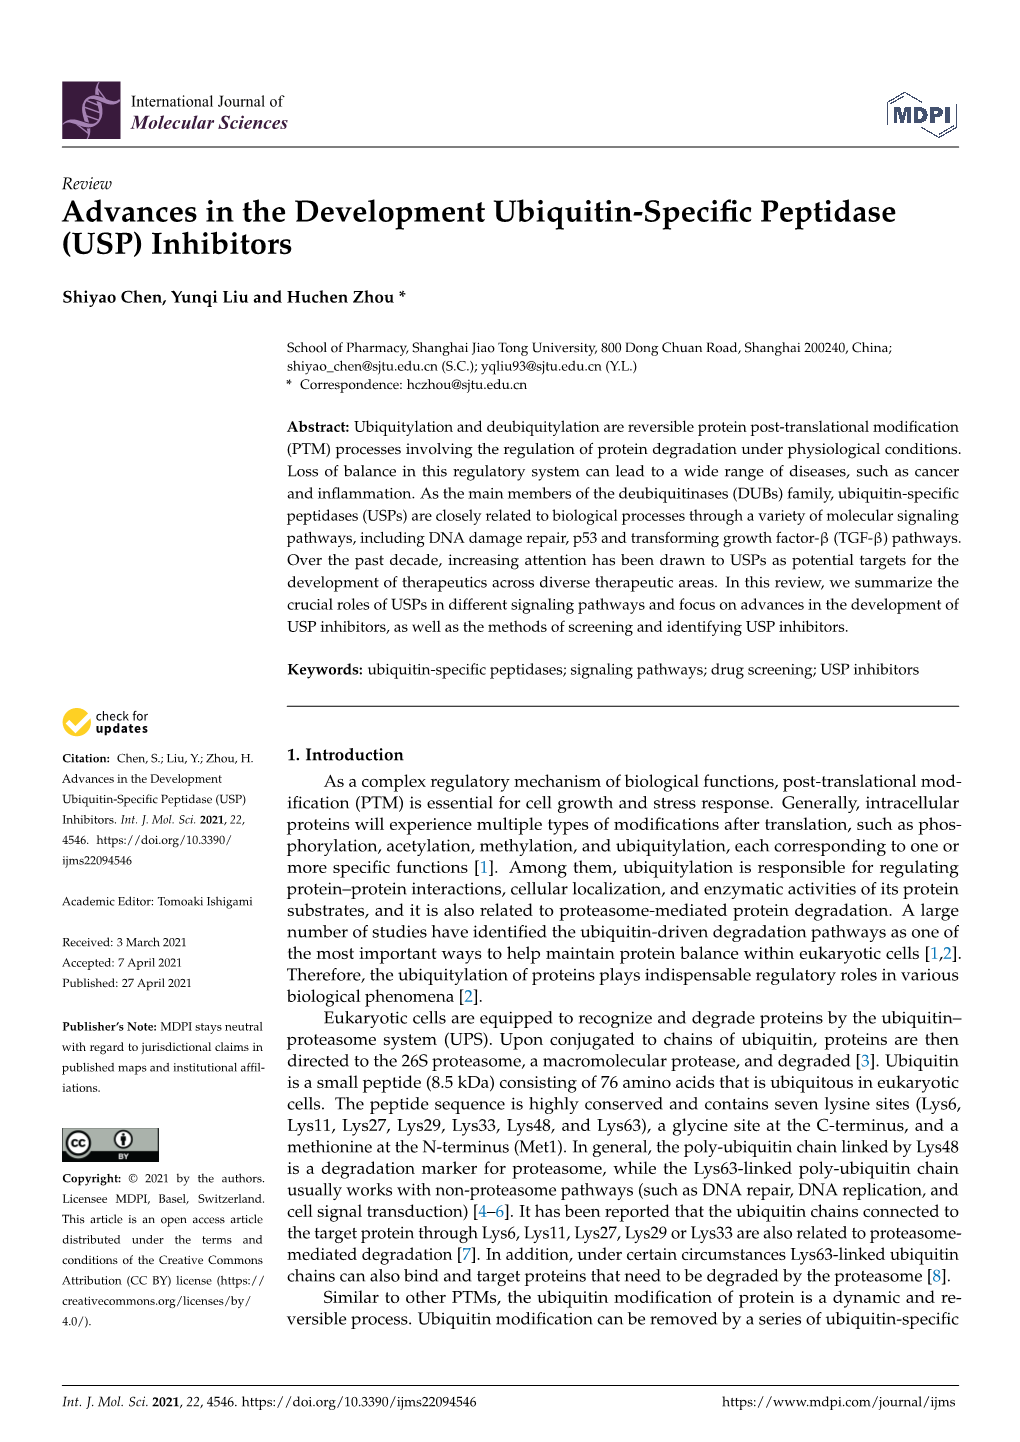 Advances in the Development Ubiquitin-Specific Peptidase (USP)